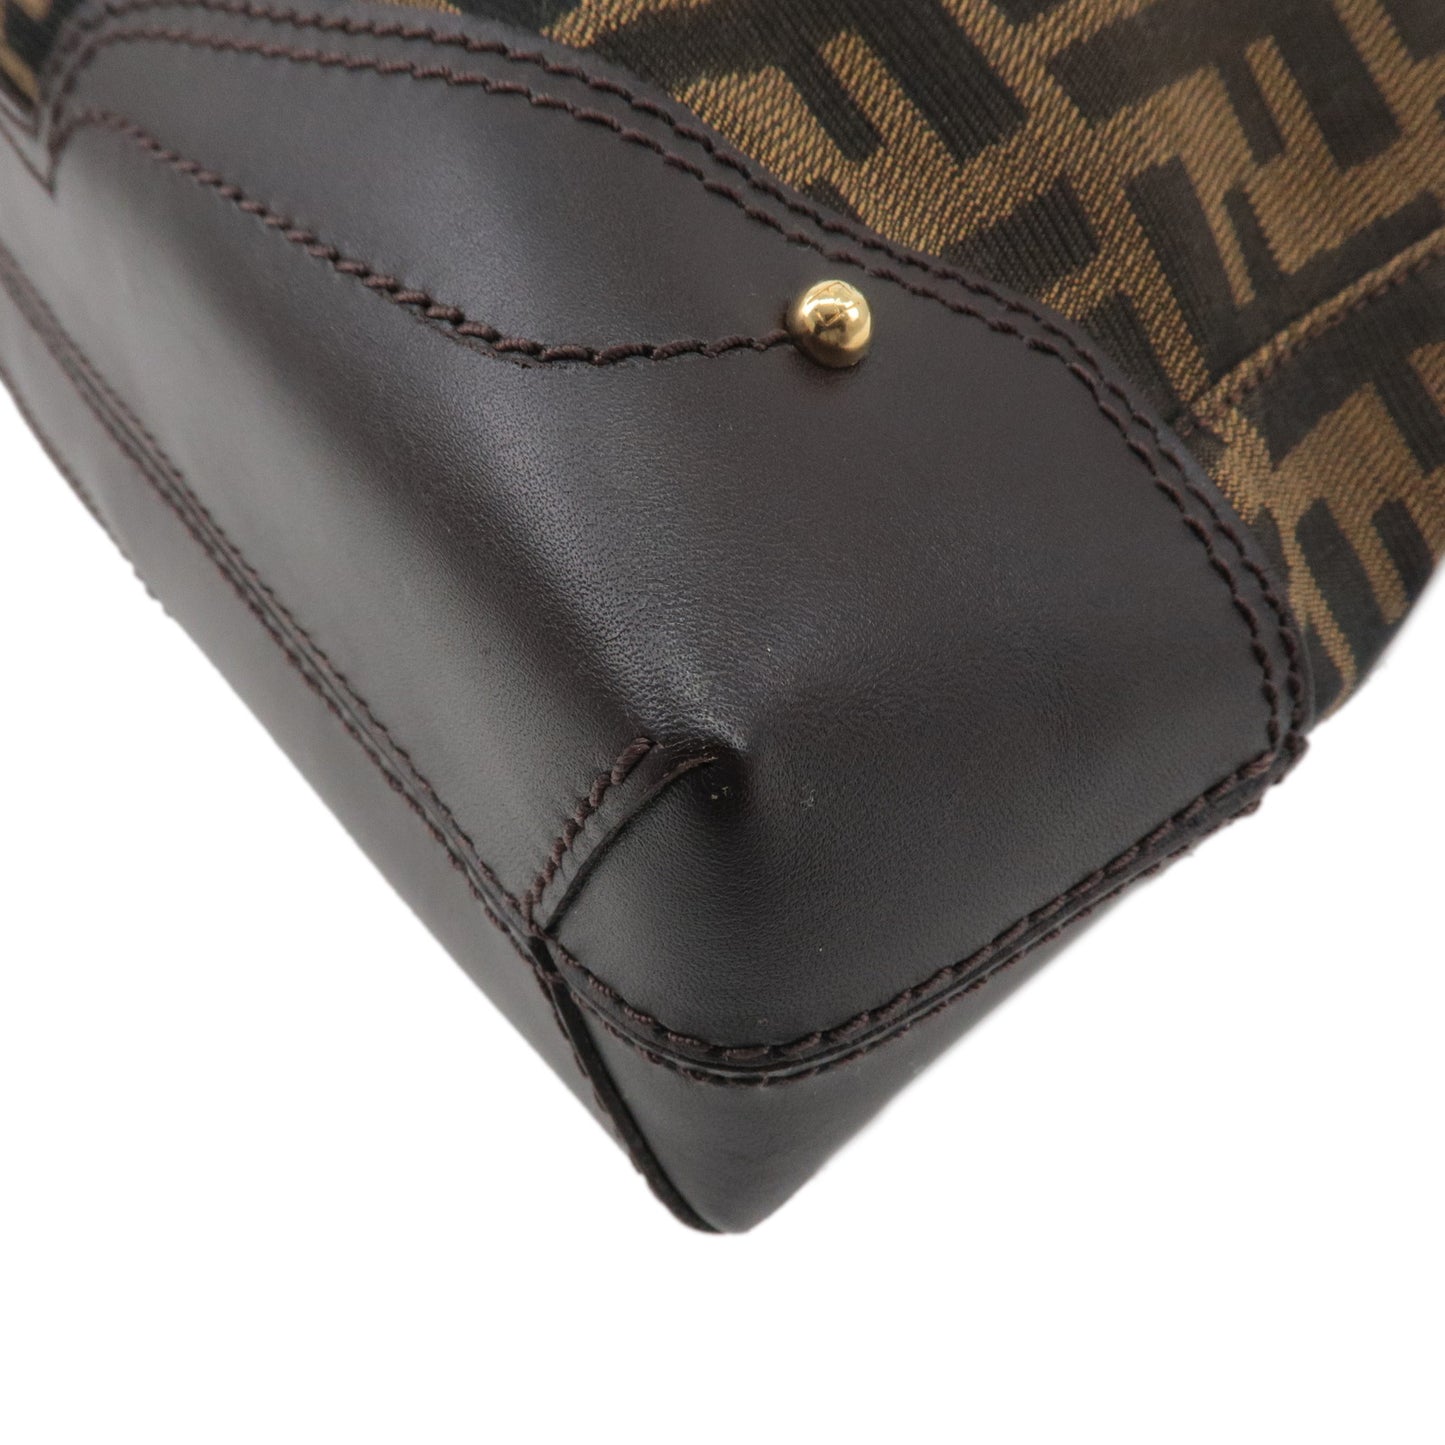 FENDI Zucca Canvas Leather Tote Bag Hand Bag Brown Black 8BH085